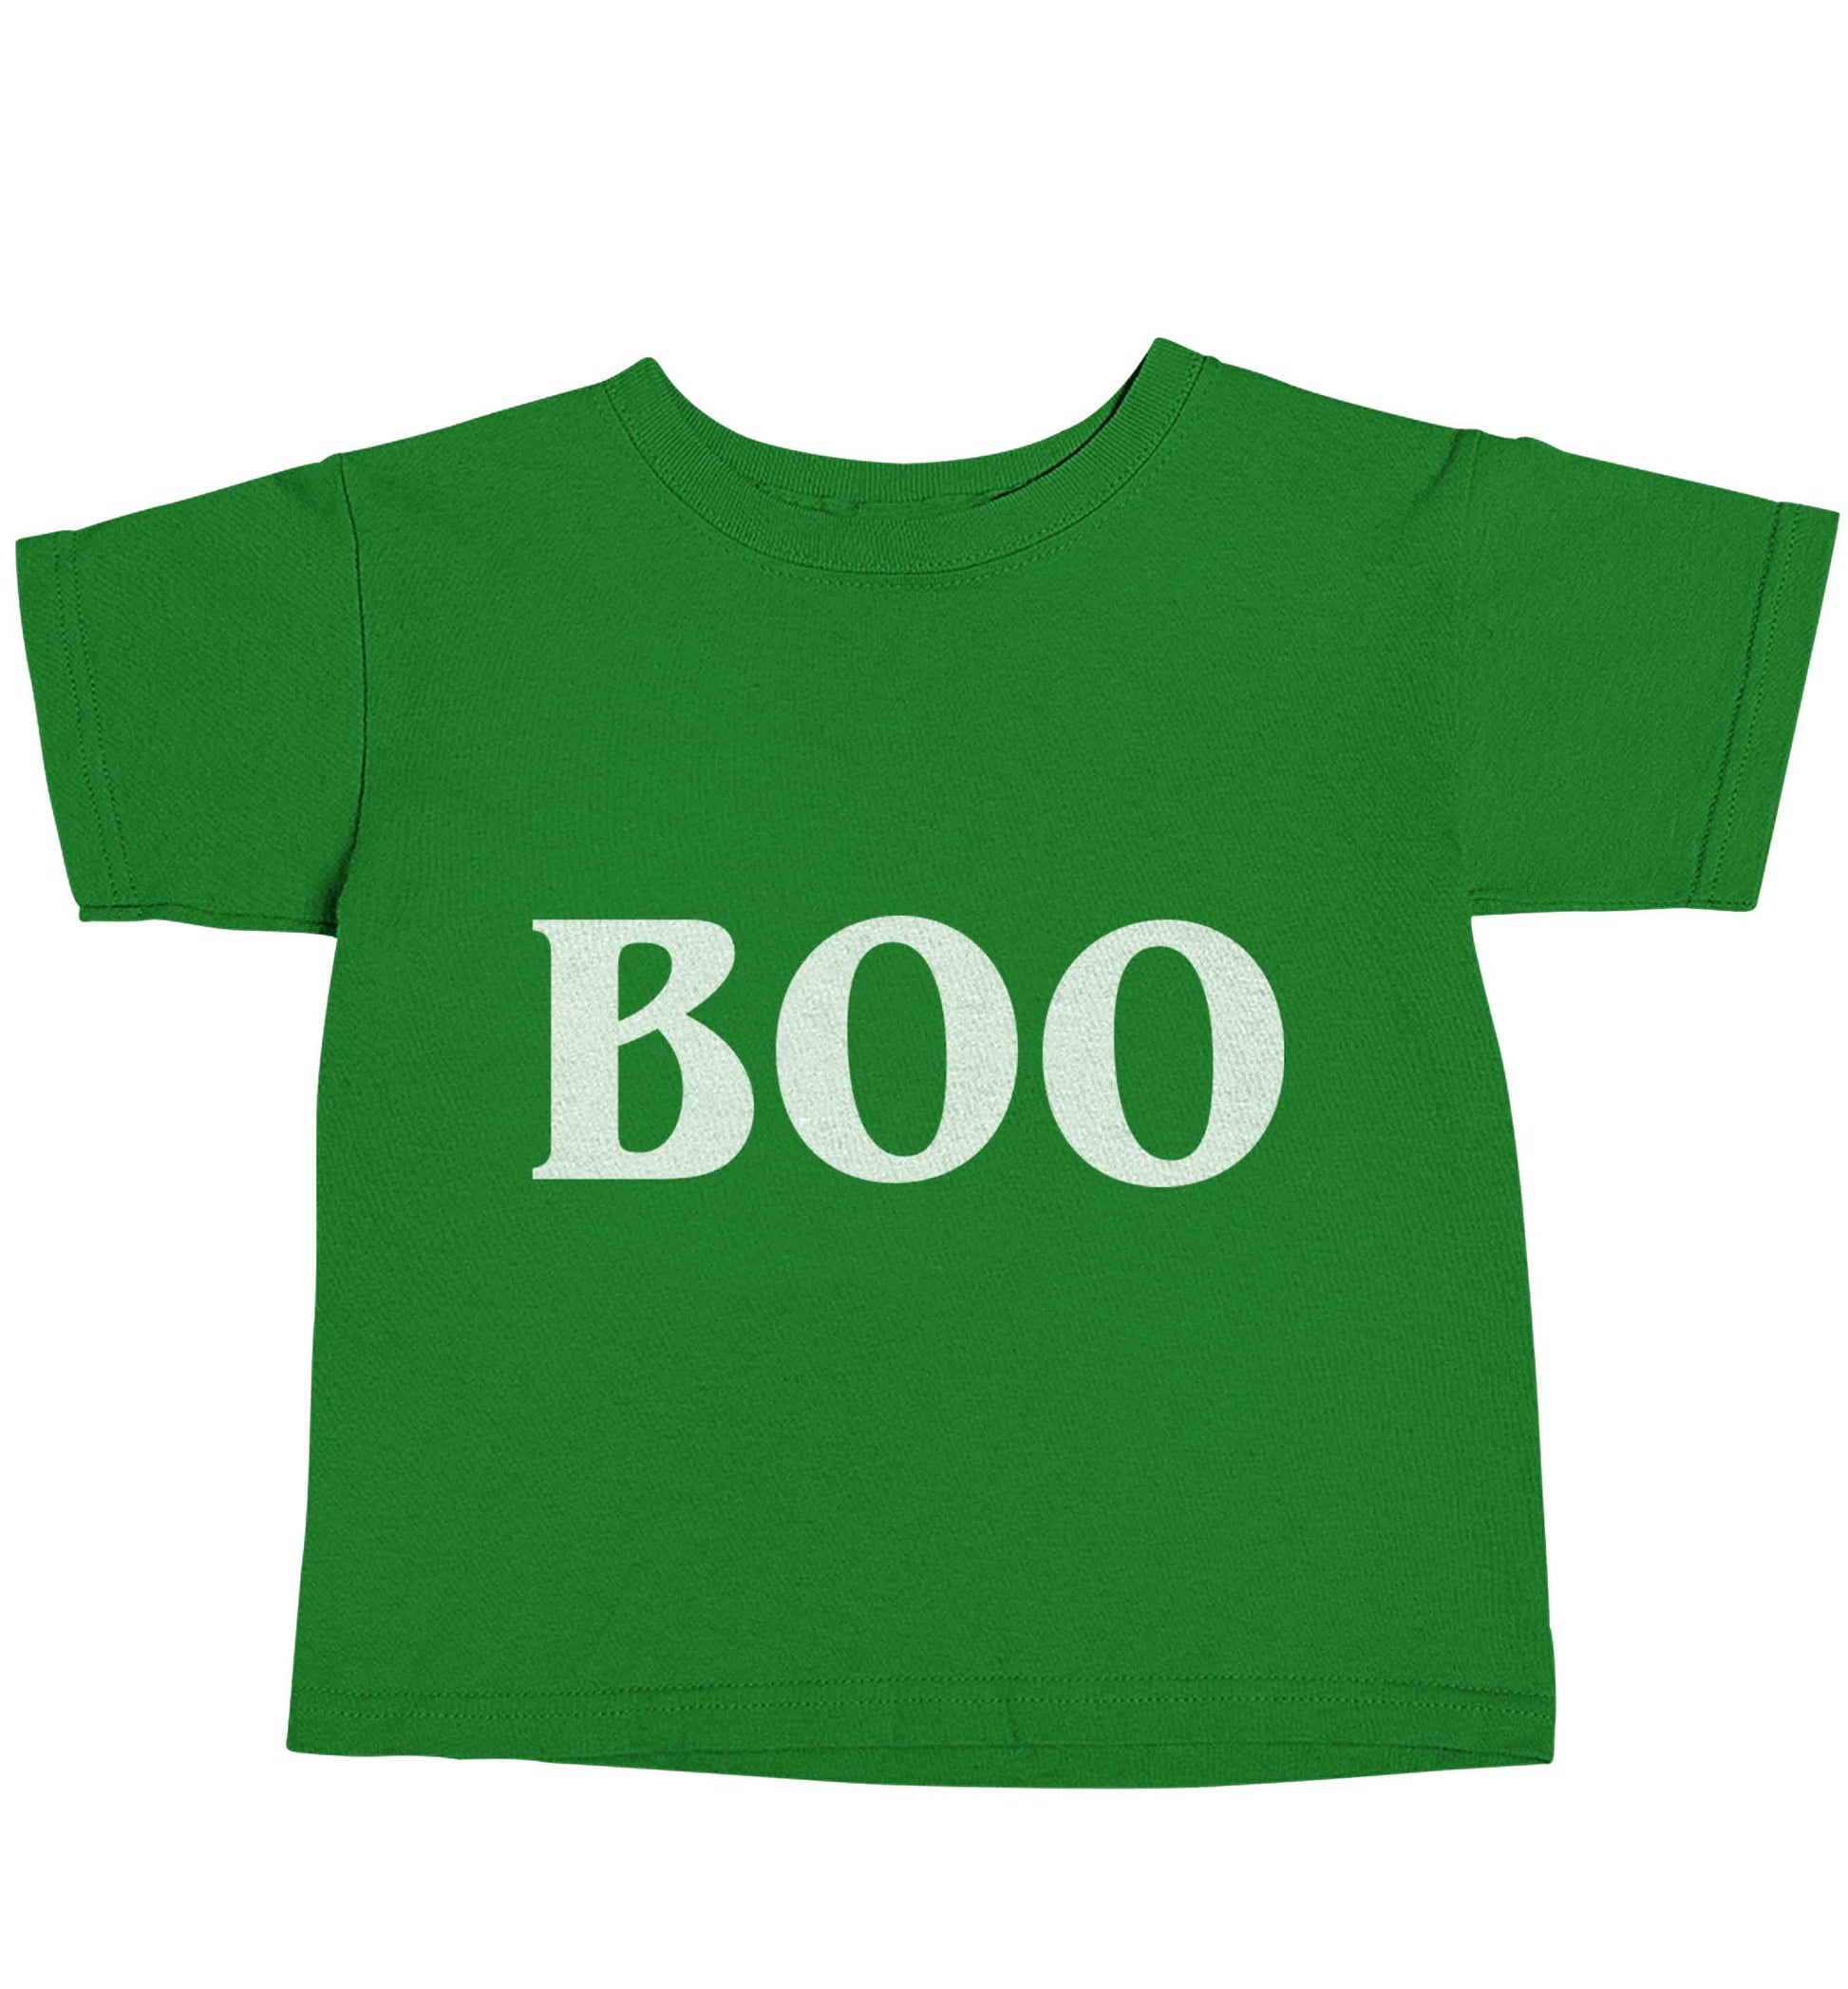 Boo green baby toddler Tshirt 2 Years